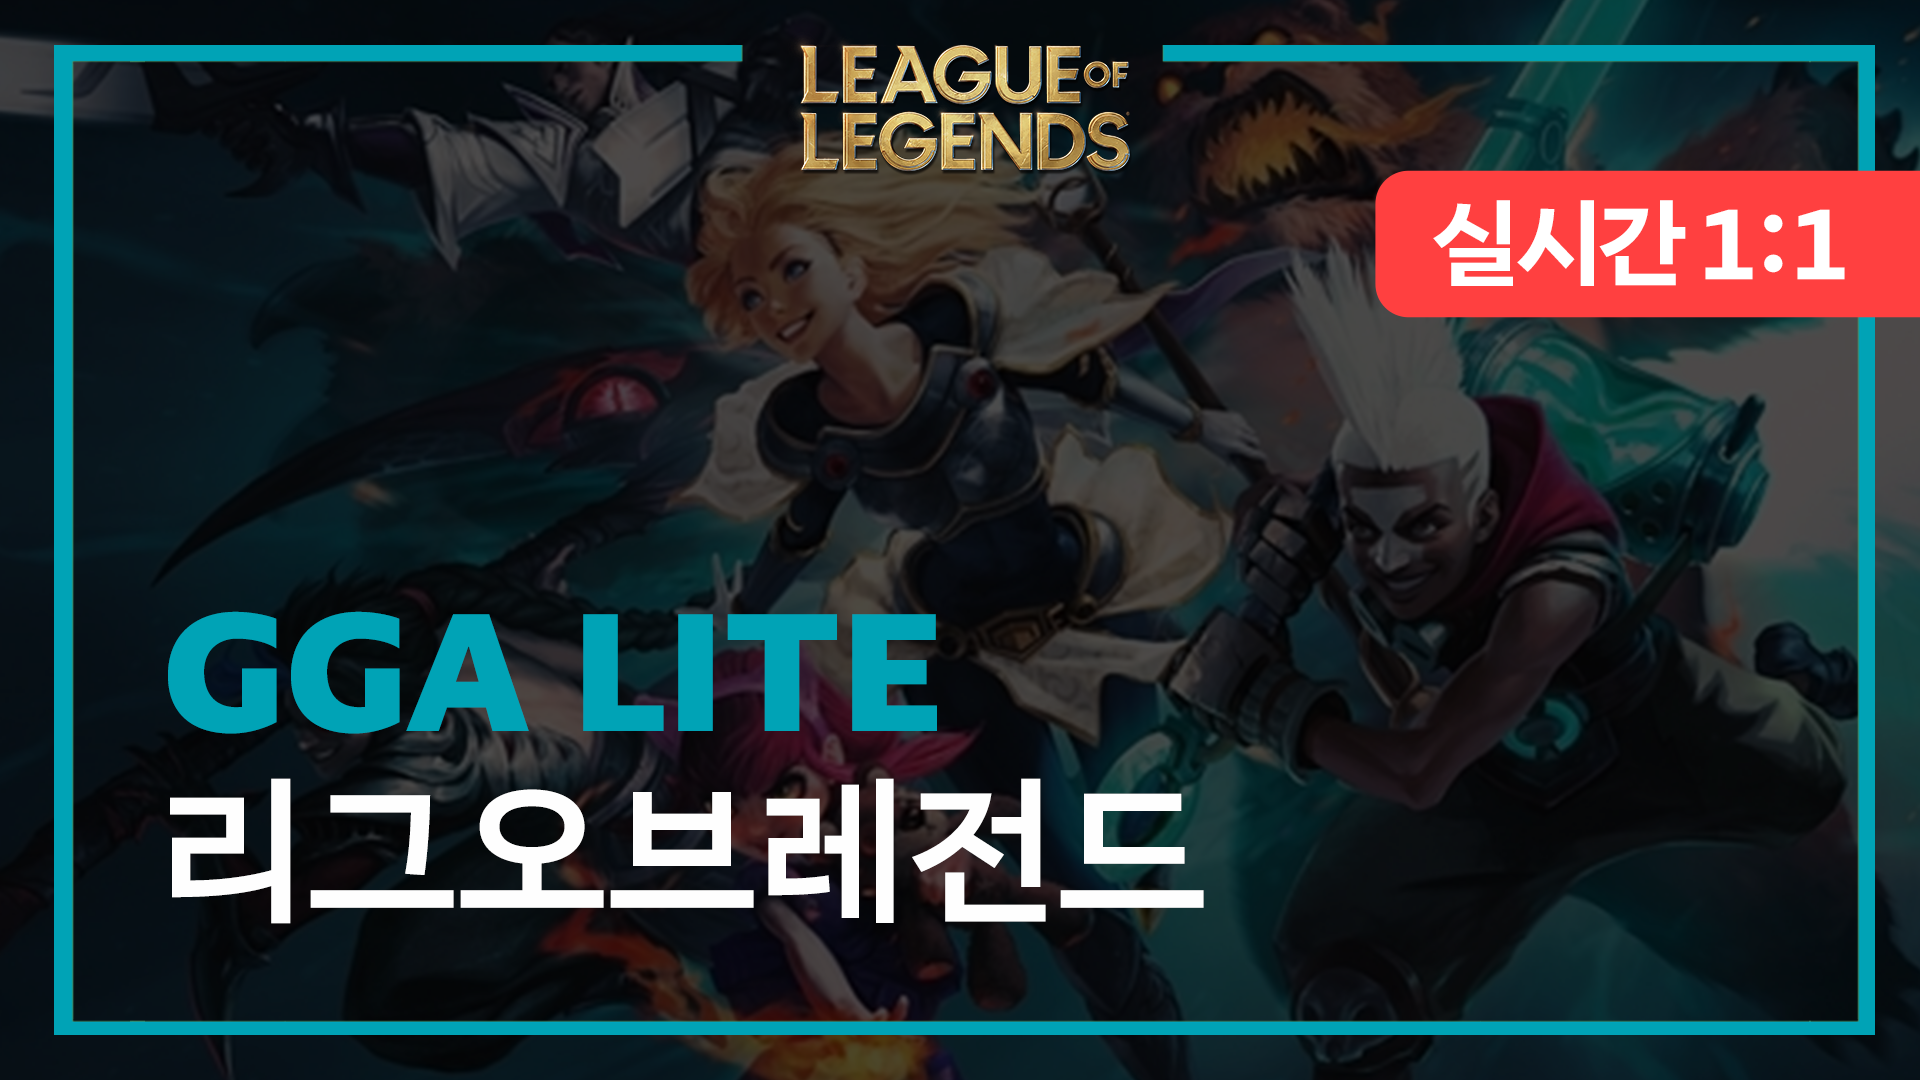 GGA LITE - League of Legends 월간 멤버십